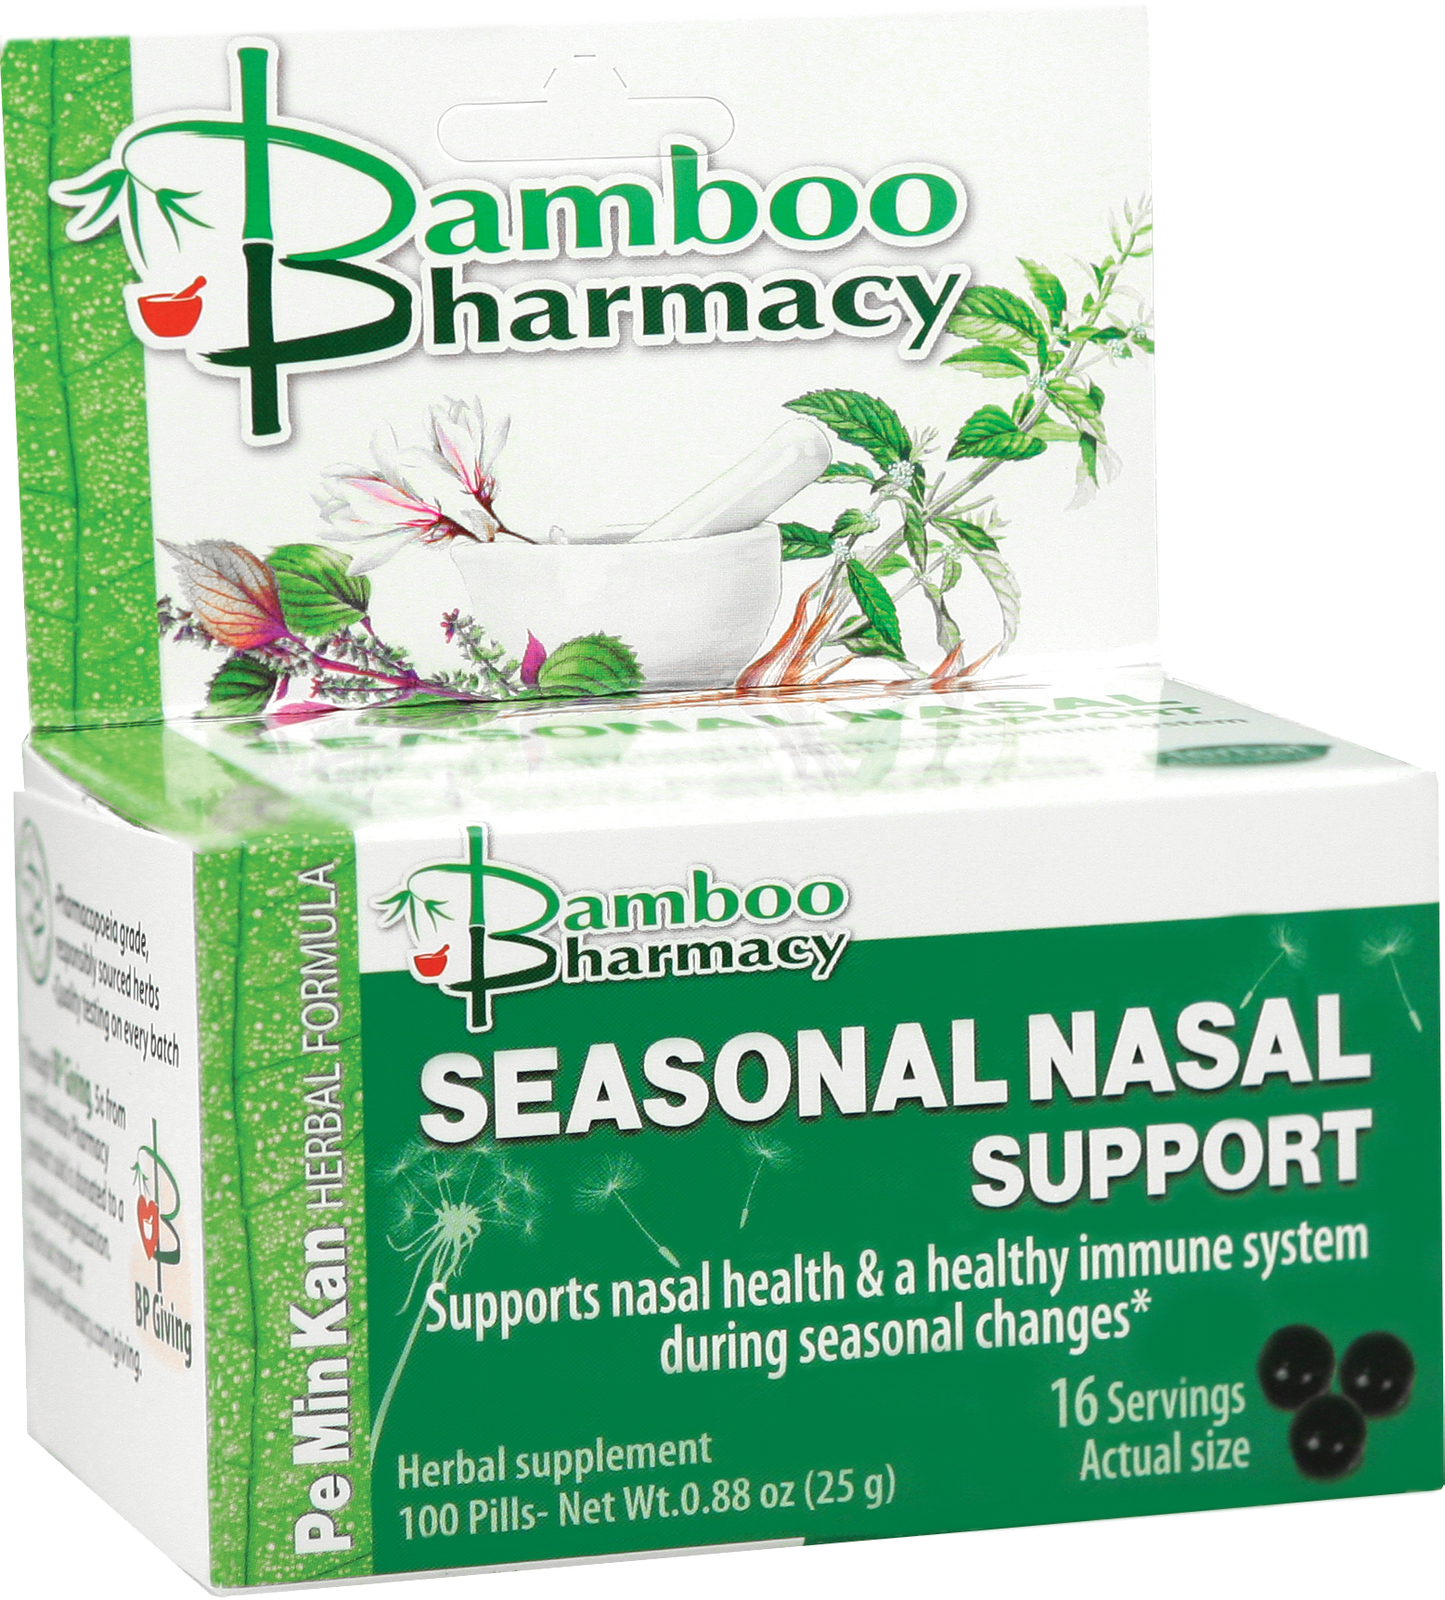 Seasonal Nasal Support